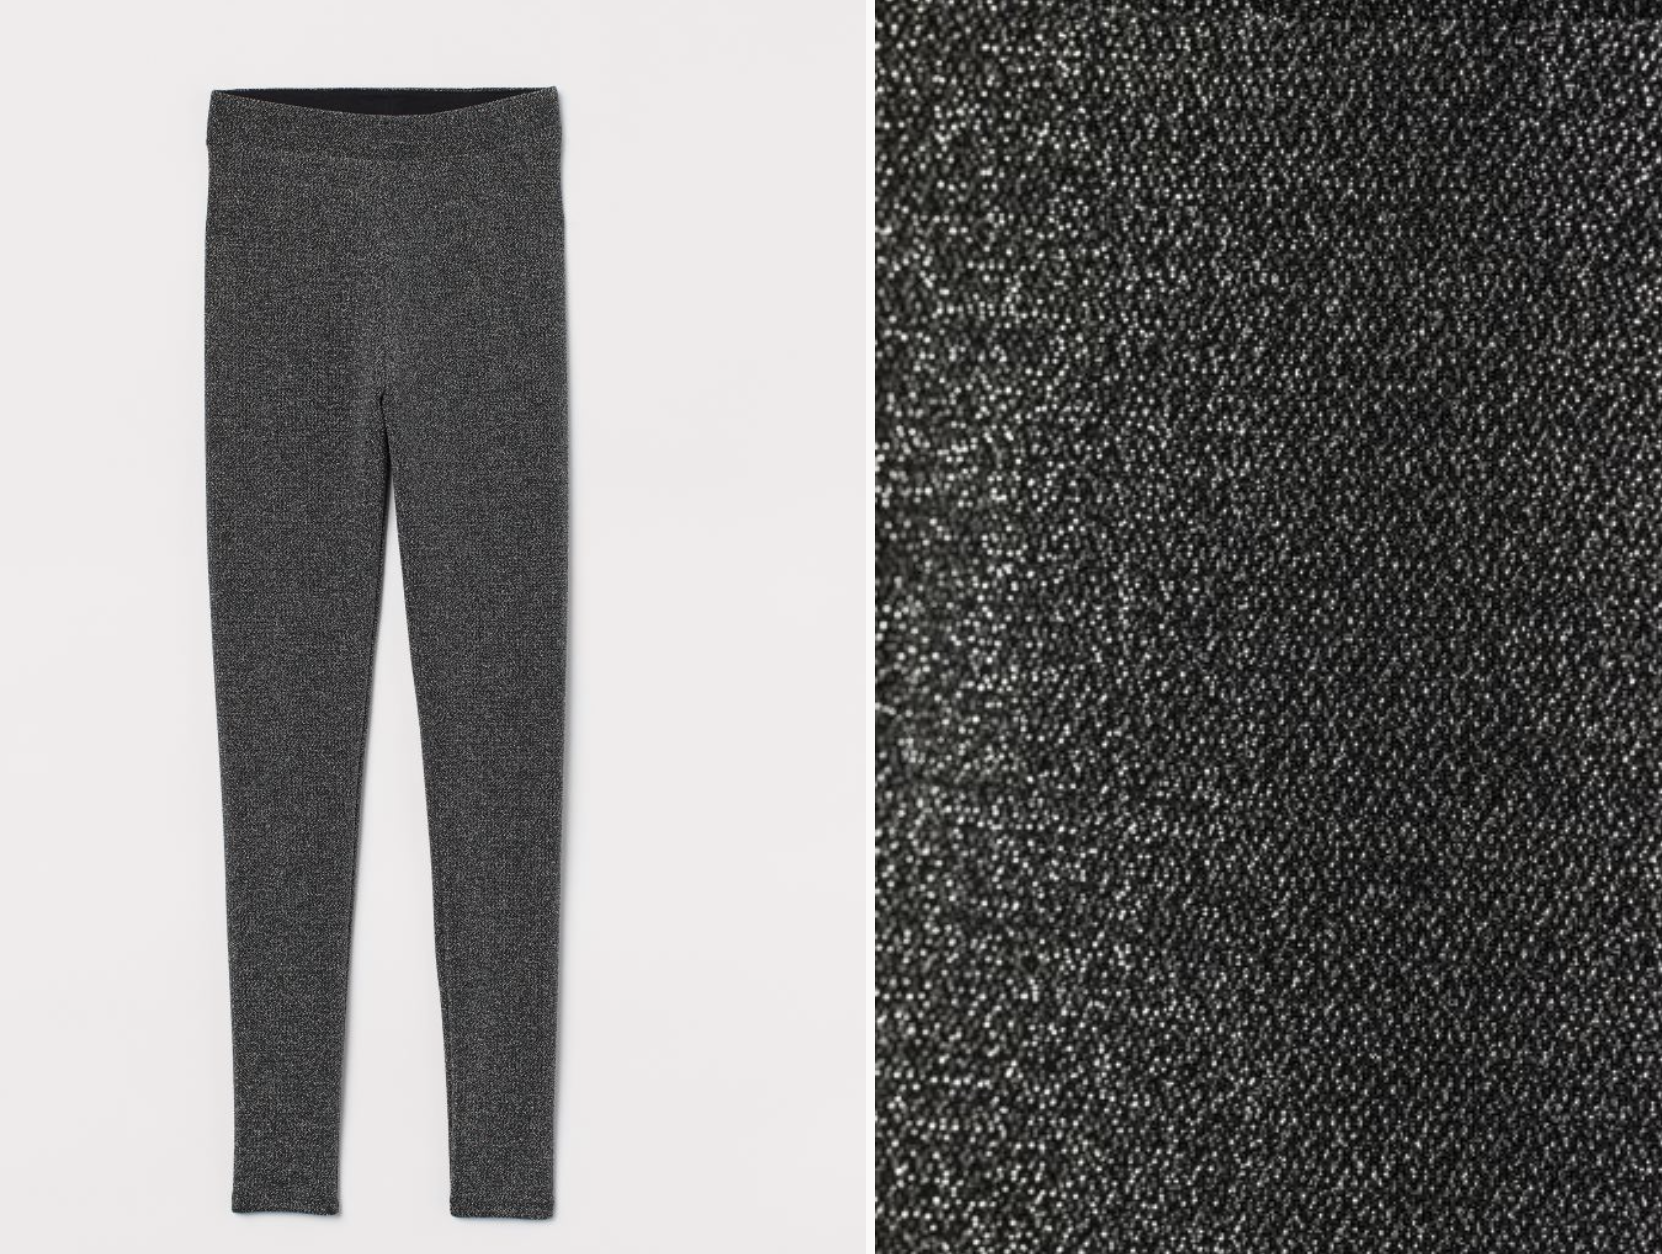 Pantalones metalizados de H&M